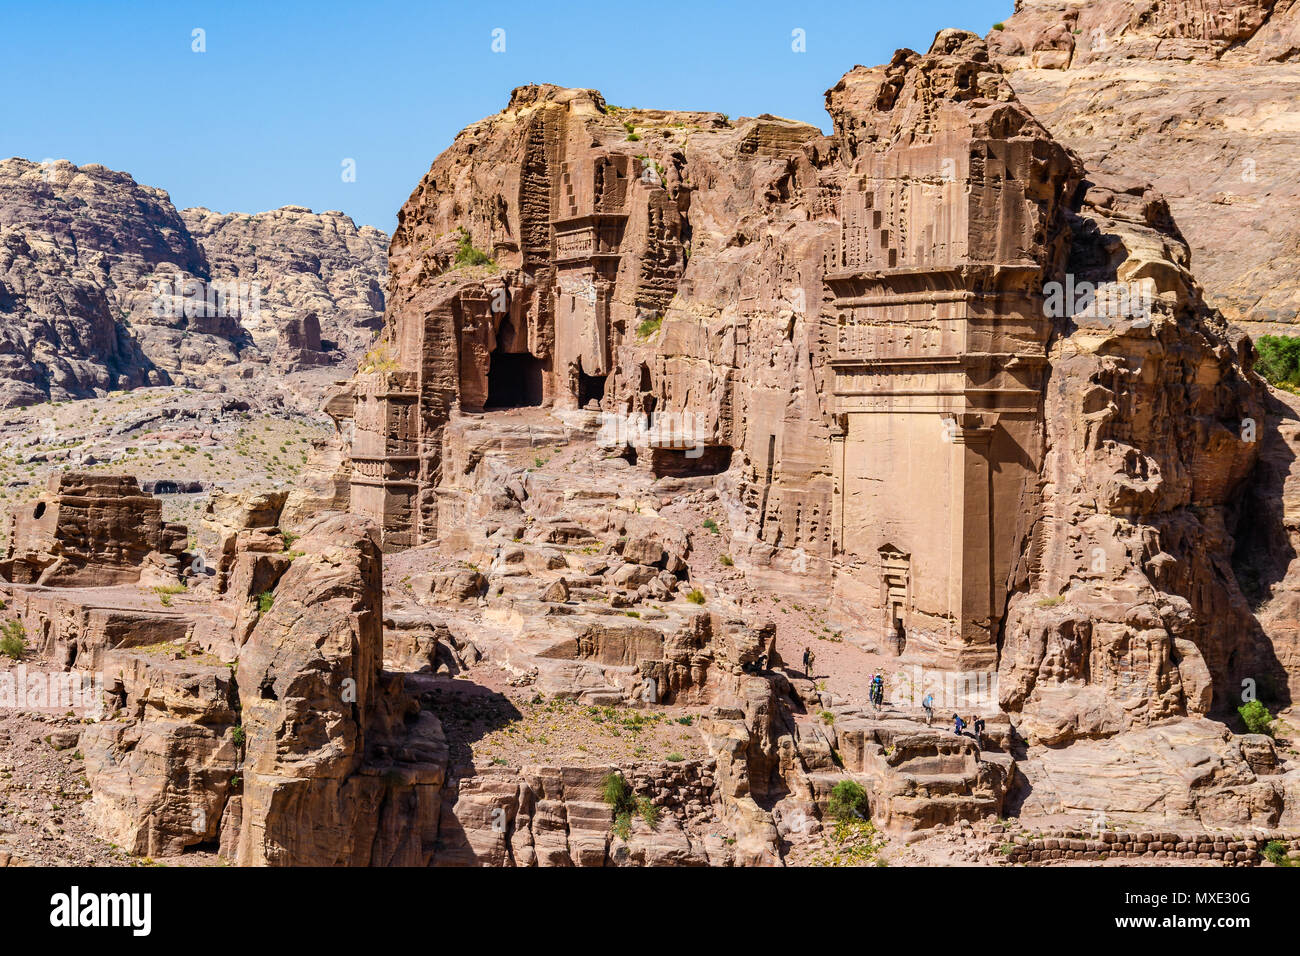 Tomb ruins in the Lost City of Petra, Jordan Stock Photo